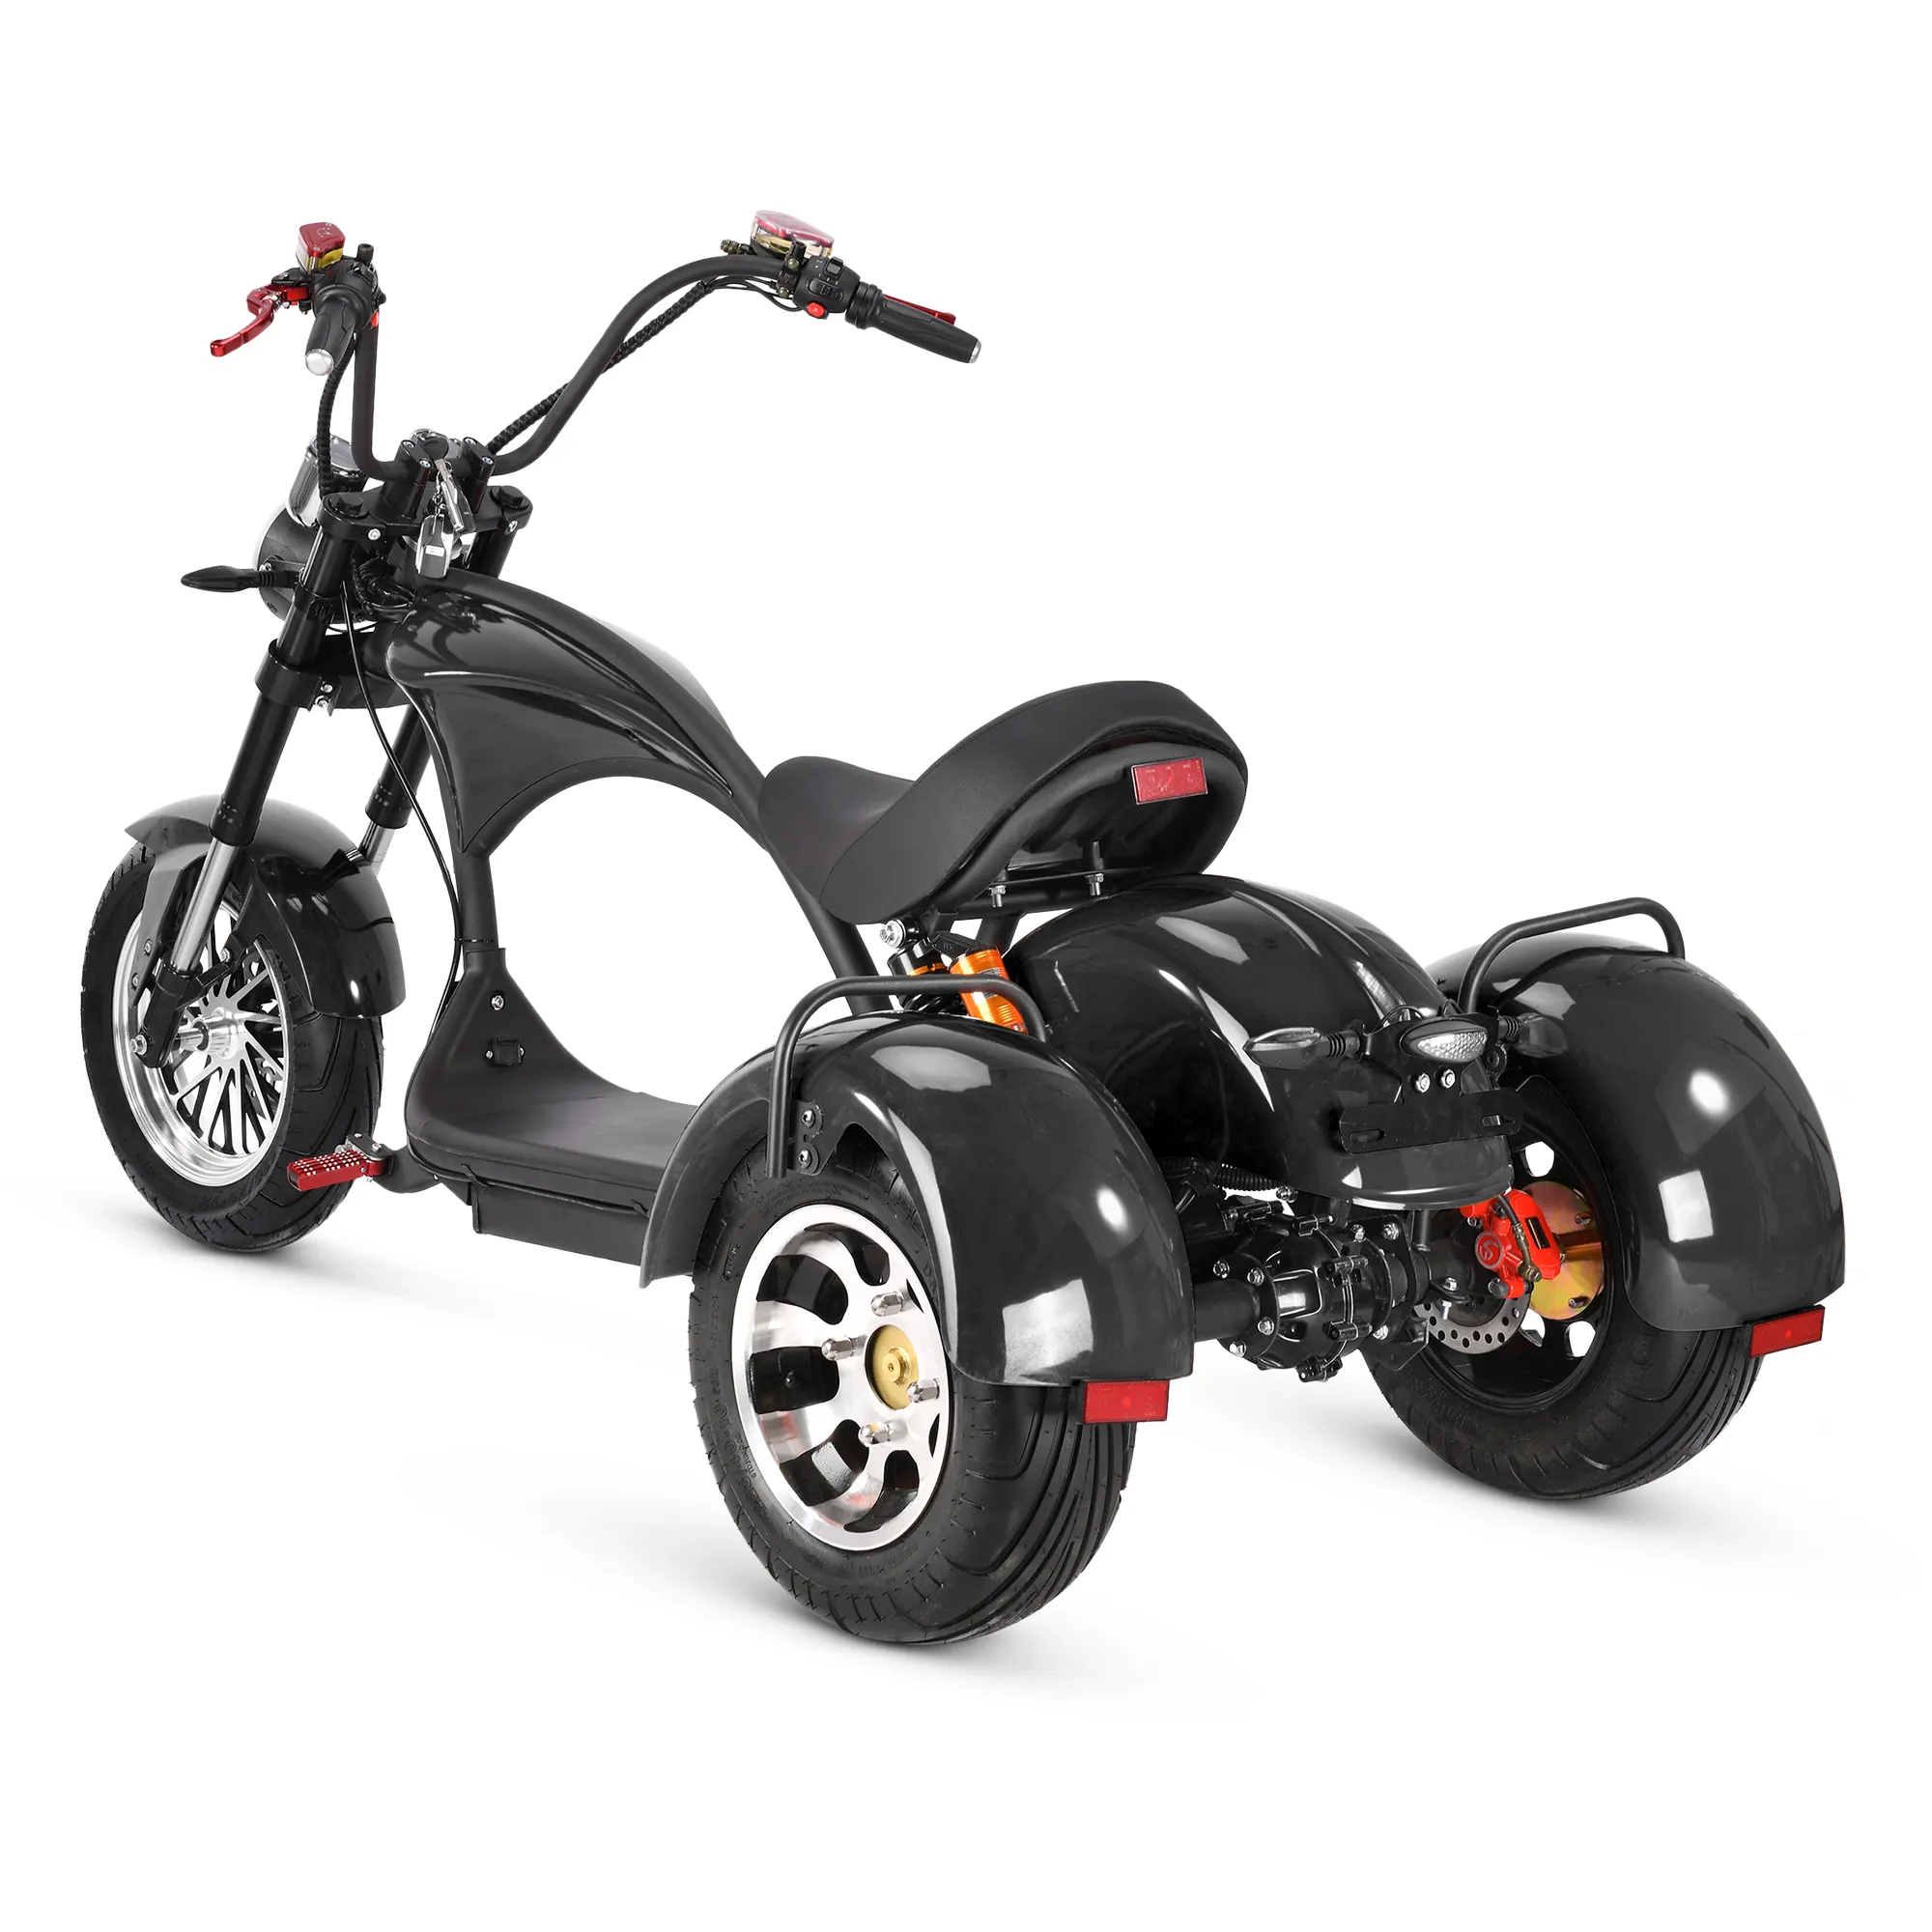 Ddp transporte pessoal m3 para motocicleta elétrica, dropshipping, para adultos, scooter elétrico